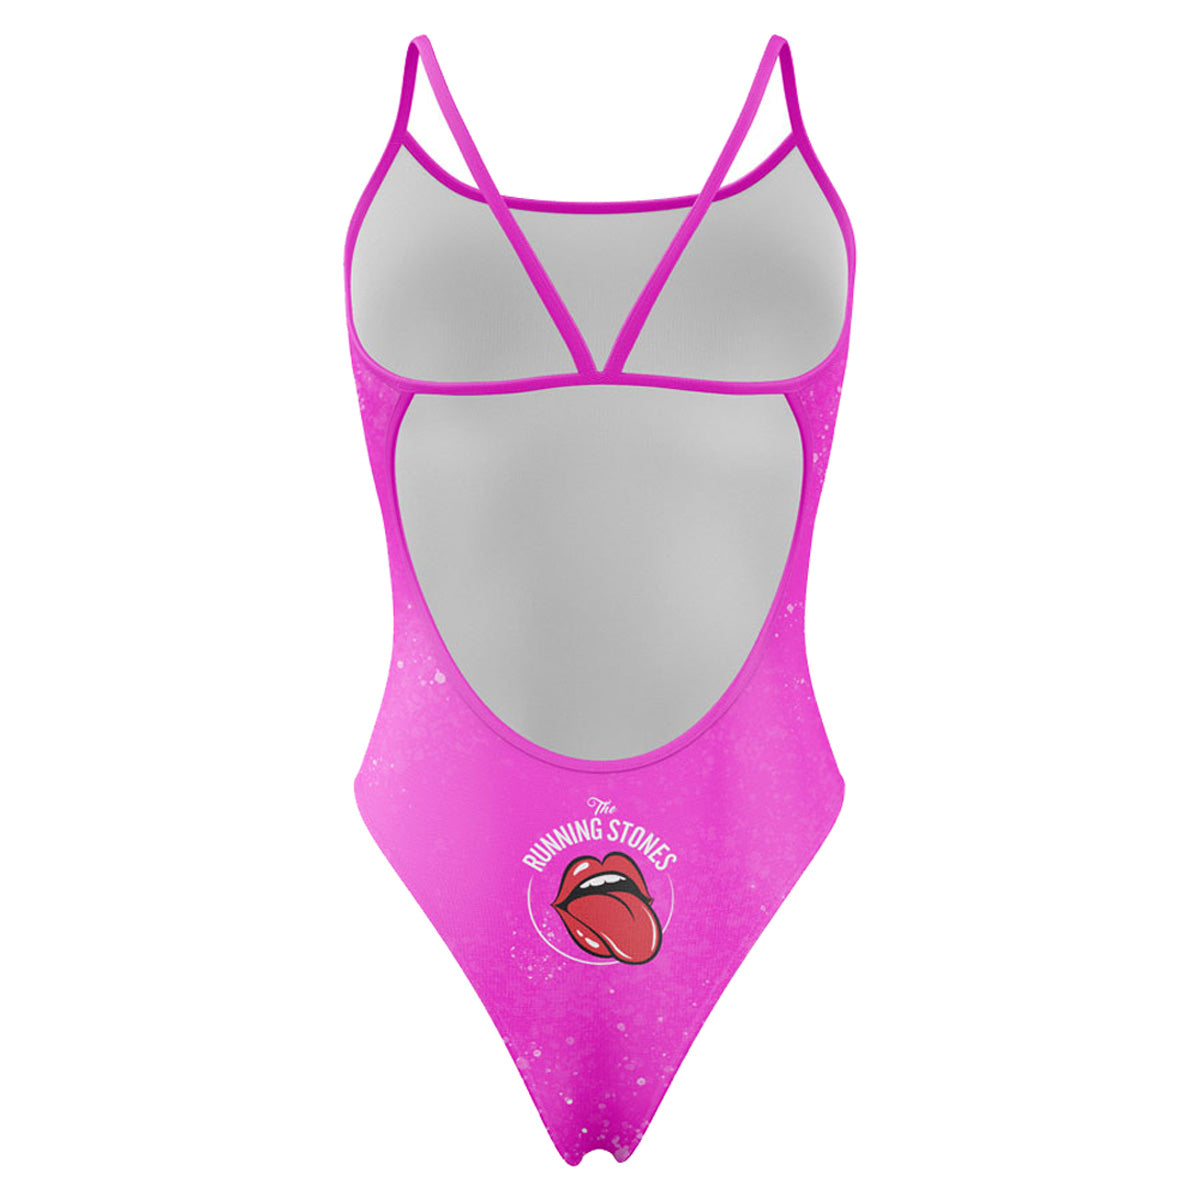 Women's swimsuit - Running Stones Pink